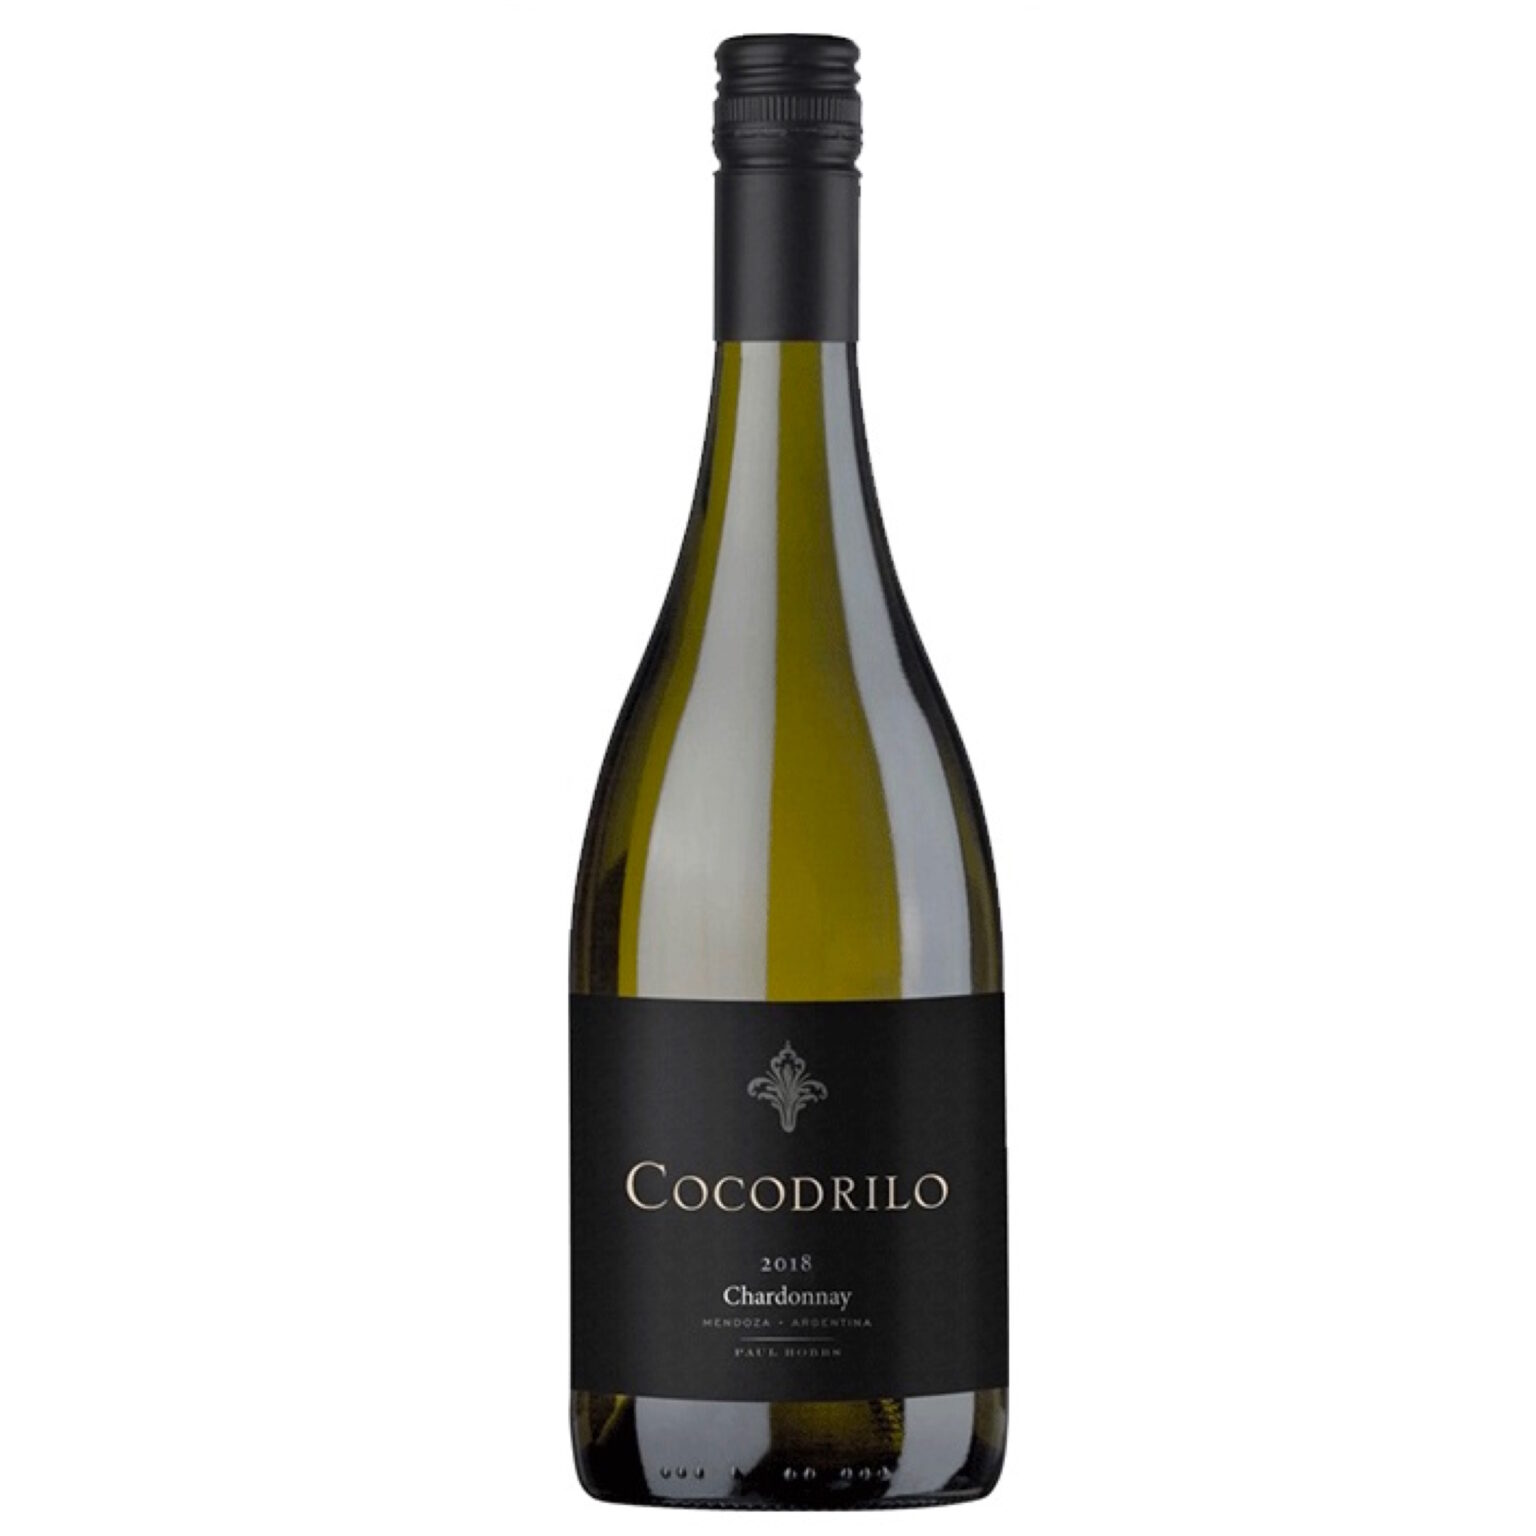 Cocodrilo Chardonnay The Spirit of Wine